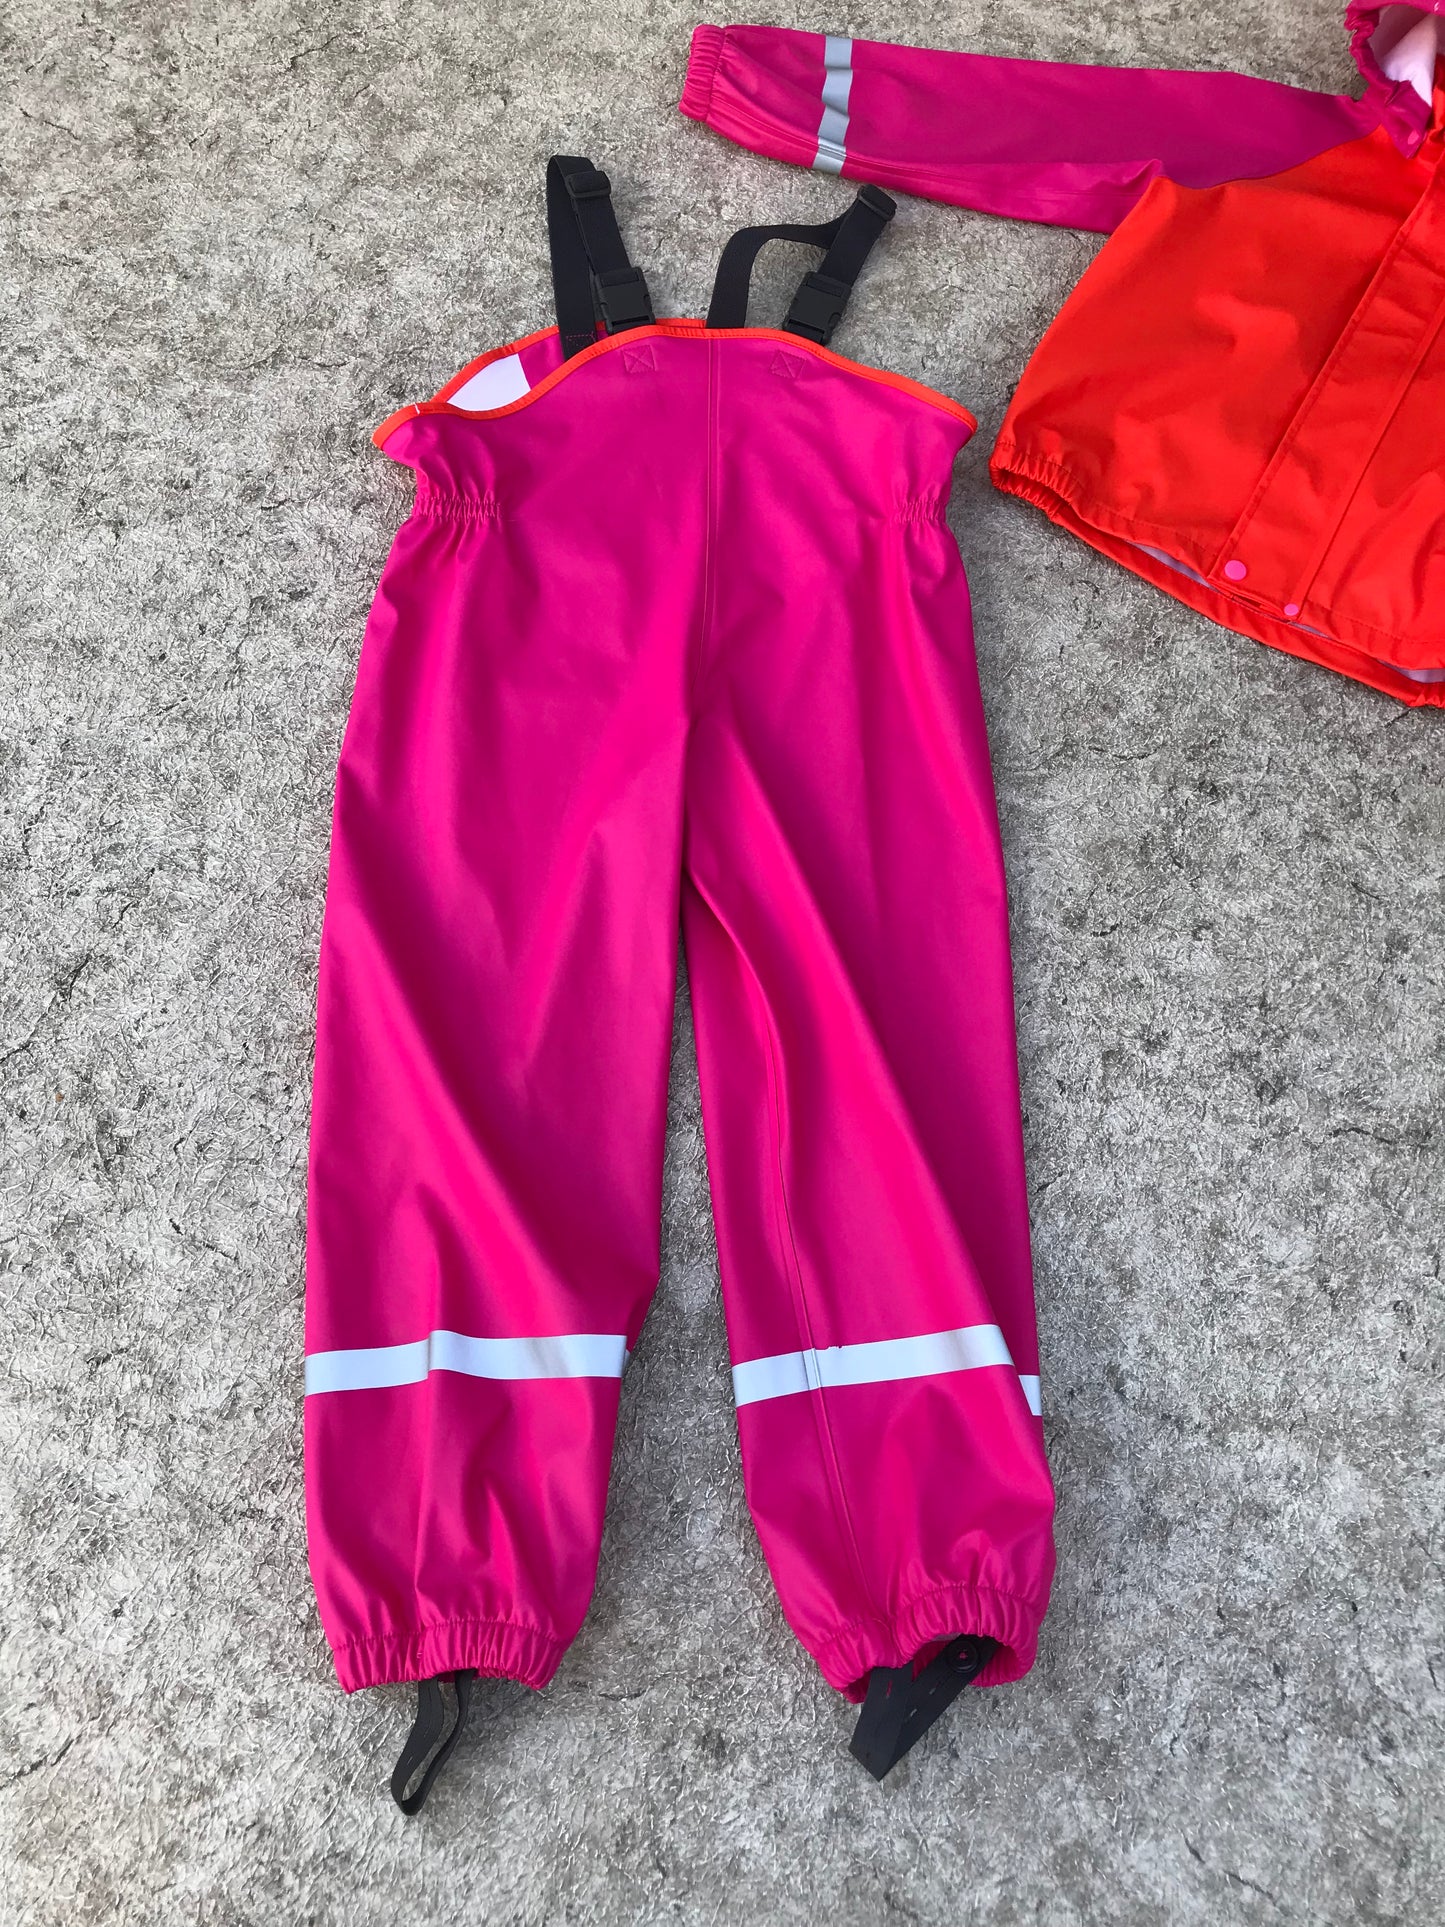 Rain Coat and Pants Child Size 6 Helly Hansen Fushia Pink Orange With Reflectors Fully Waterproof New Demo